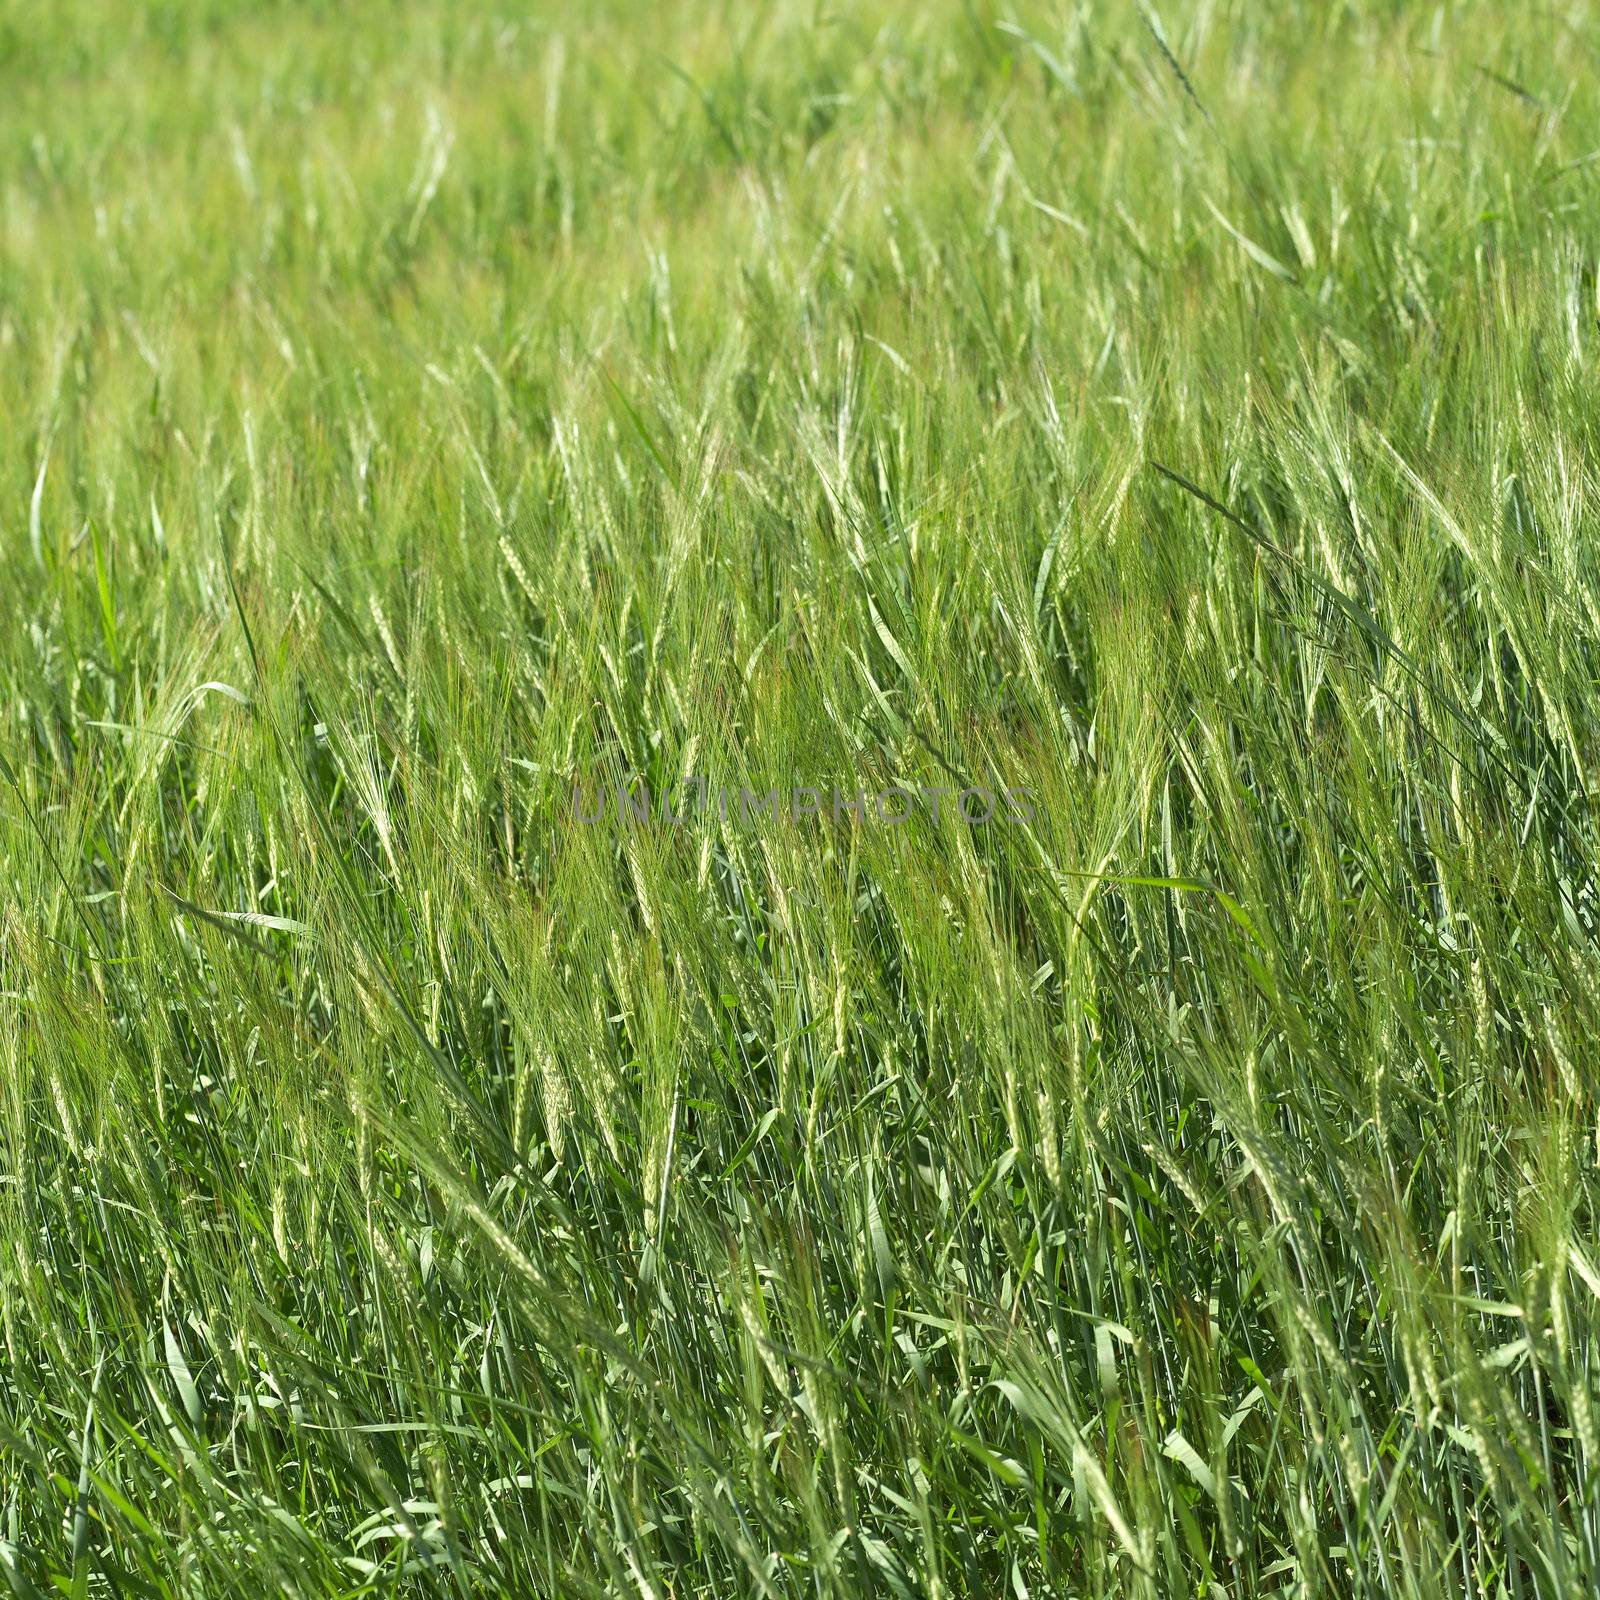 Field of grass by gemenacom